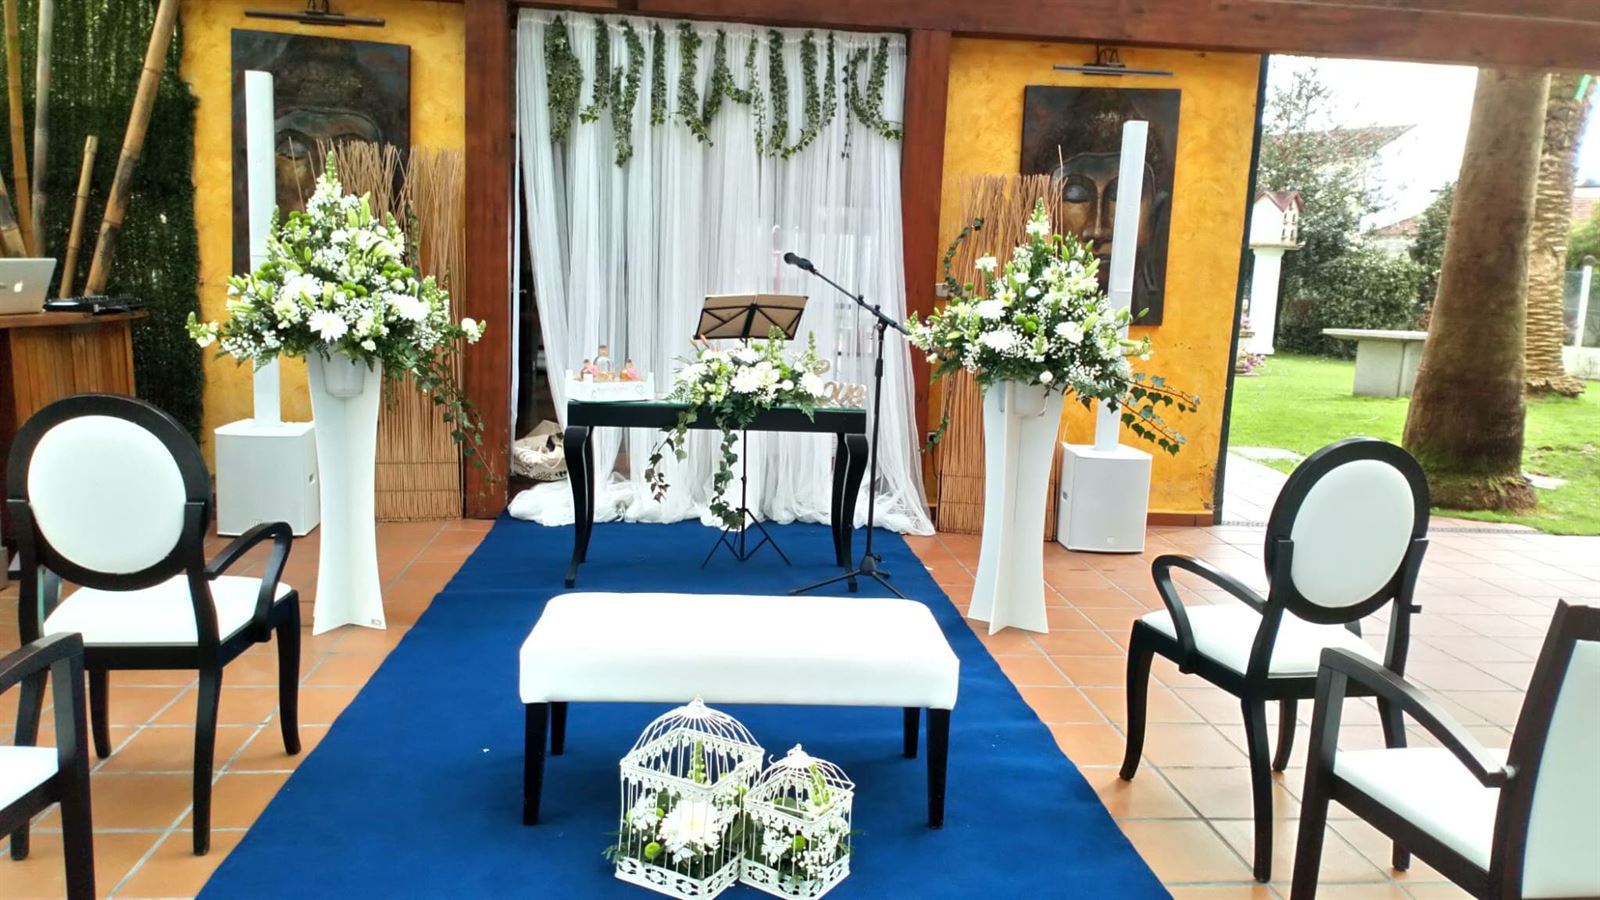 Arreglo floral ceremonia civil - Imagen 1